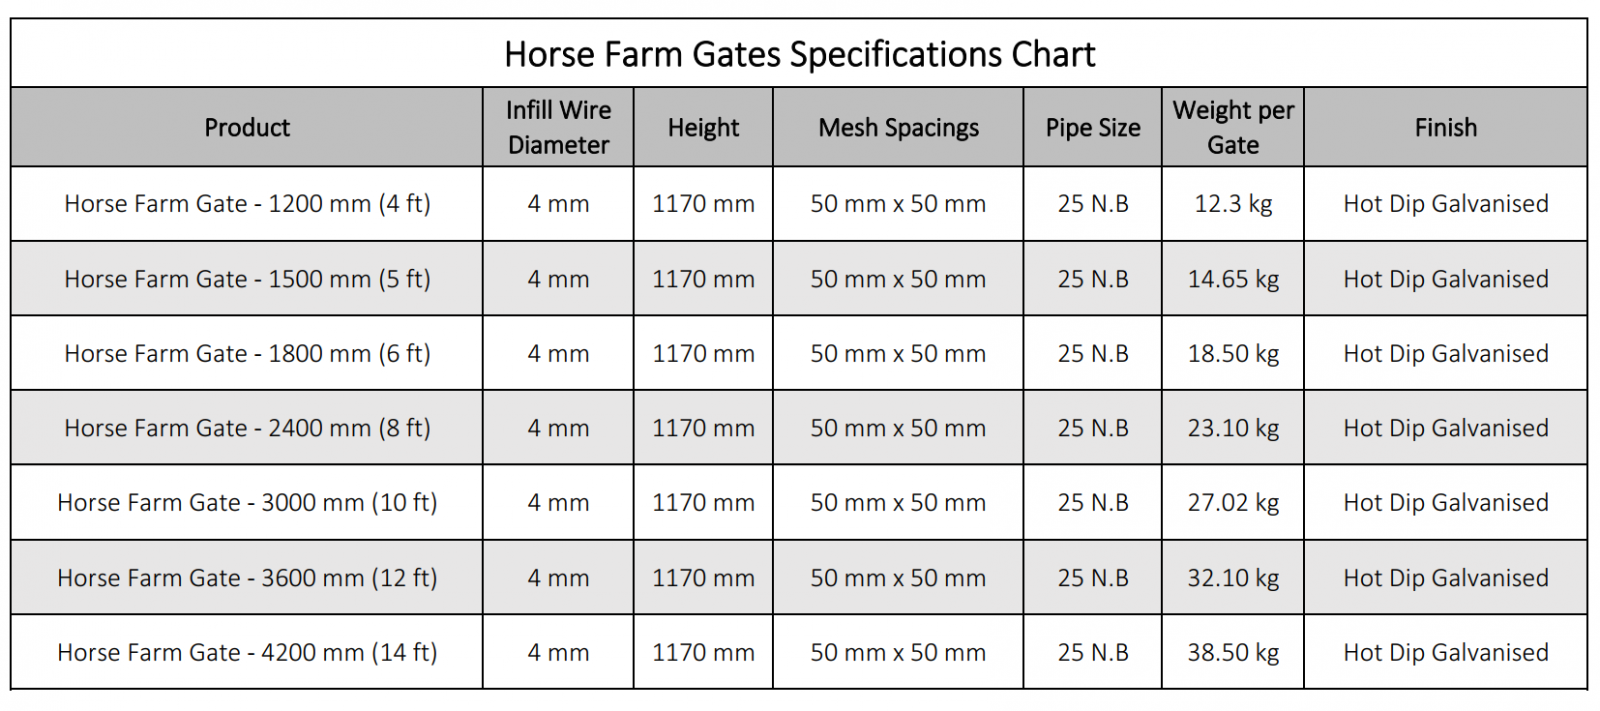 horse-farm-gates-specification